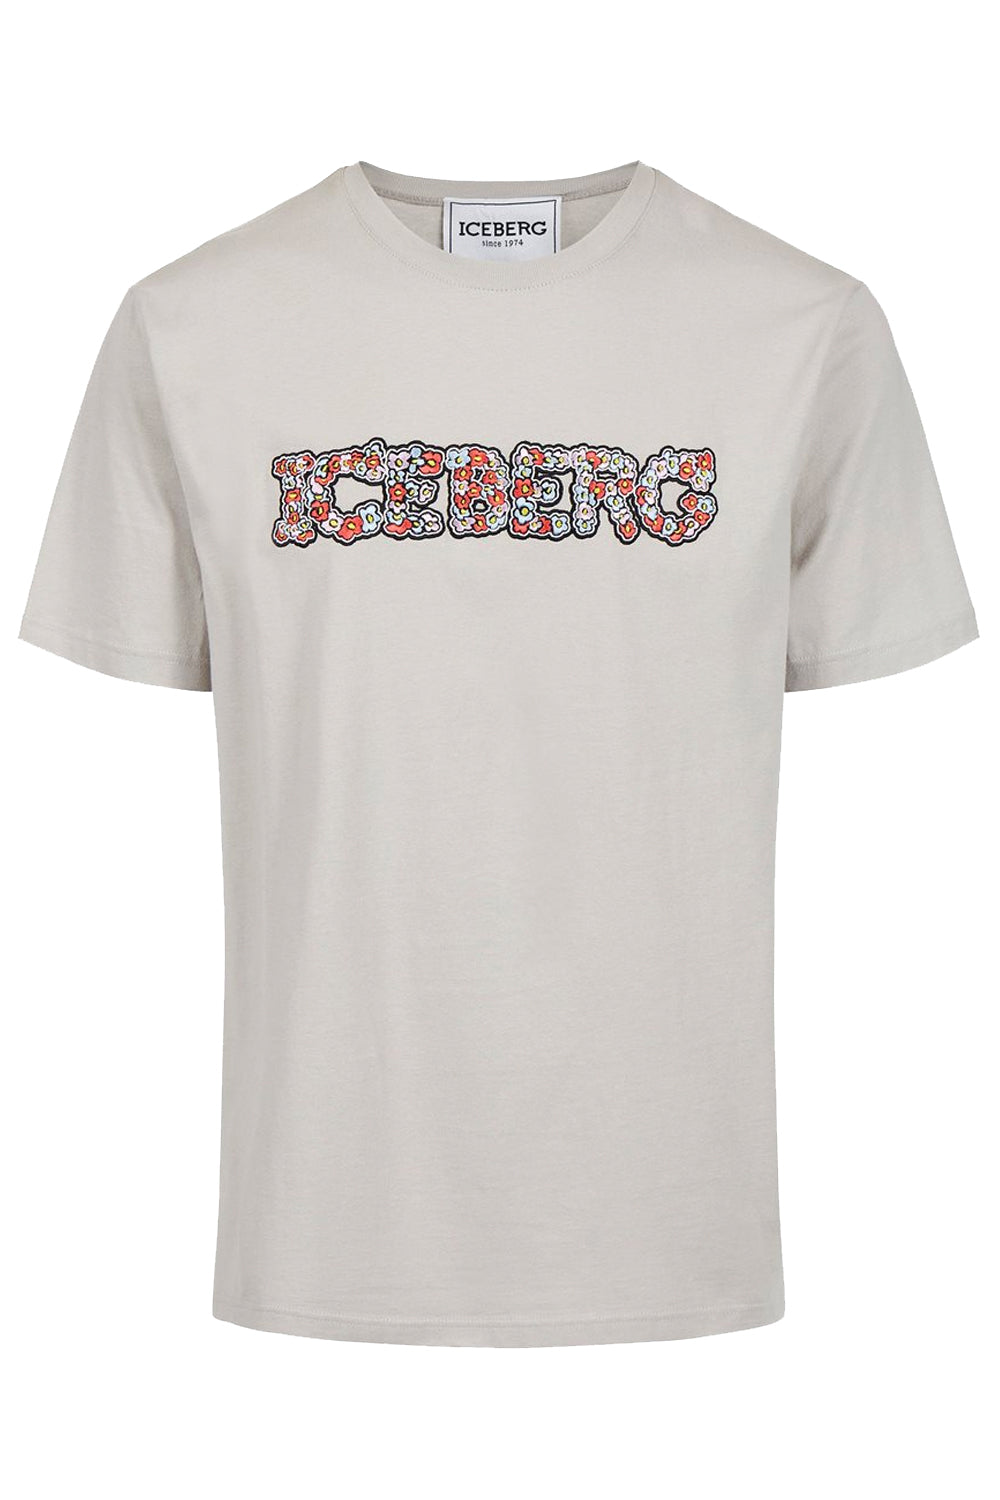 ICEBERG T-shirt con logo floreale